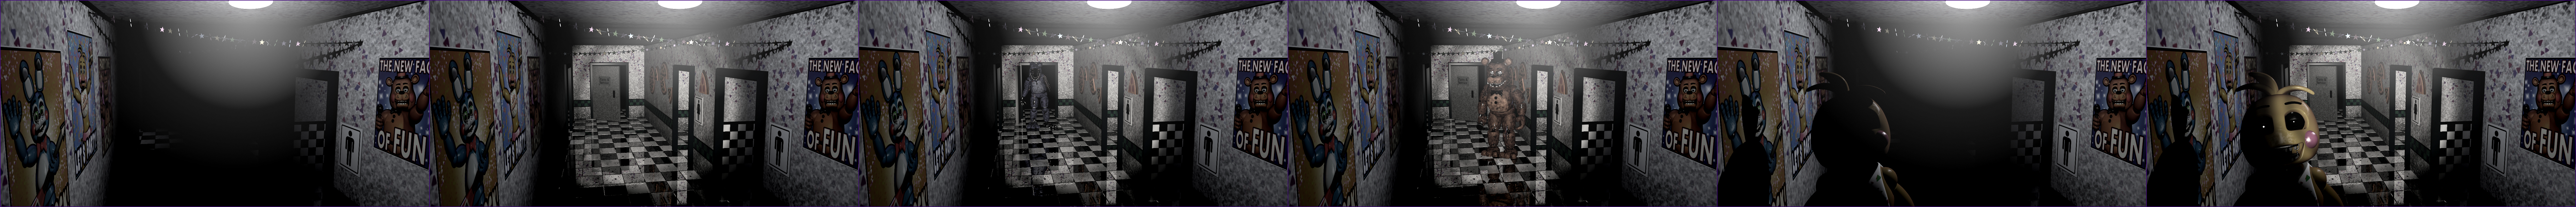 Five Nights at Freddy's 2 - Main Hall